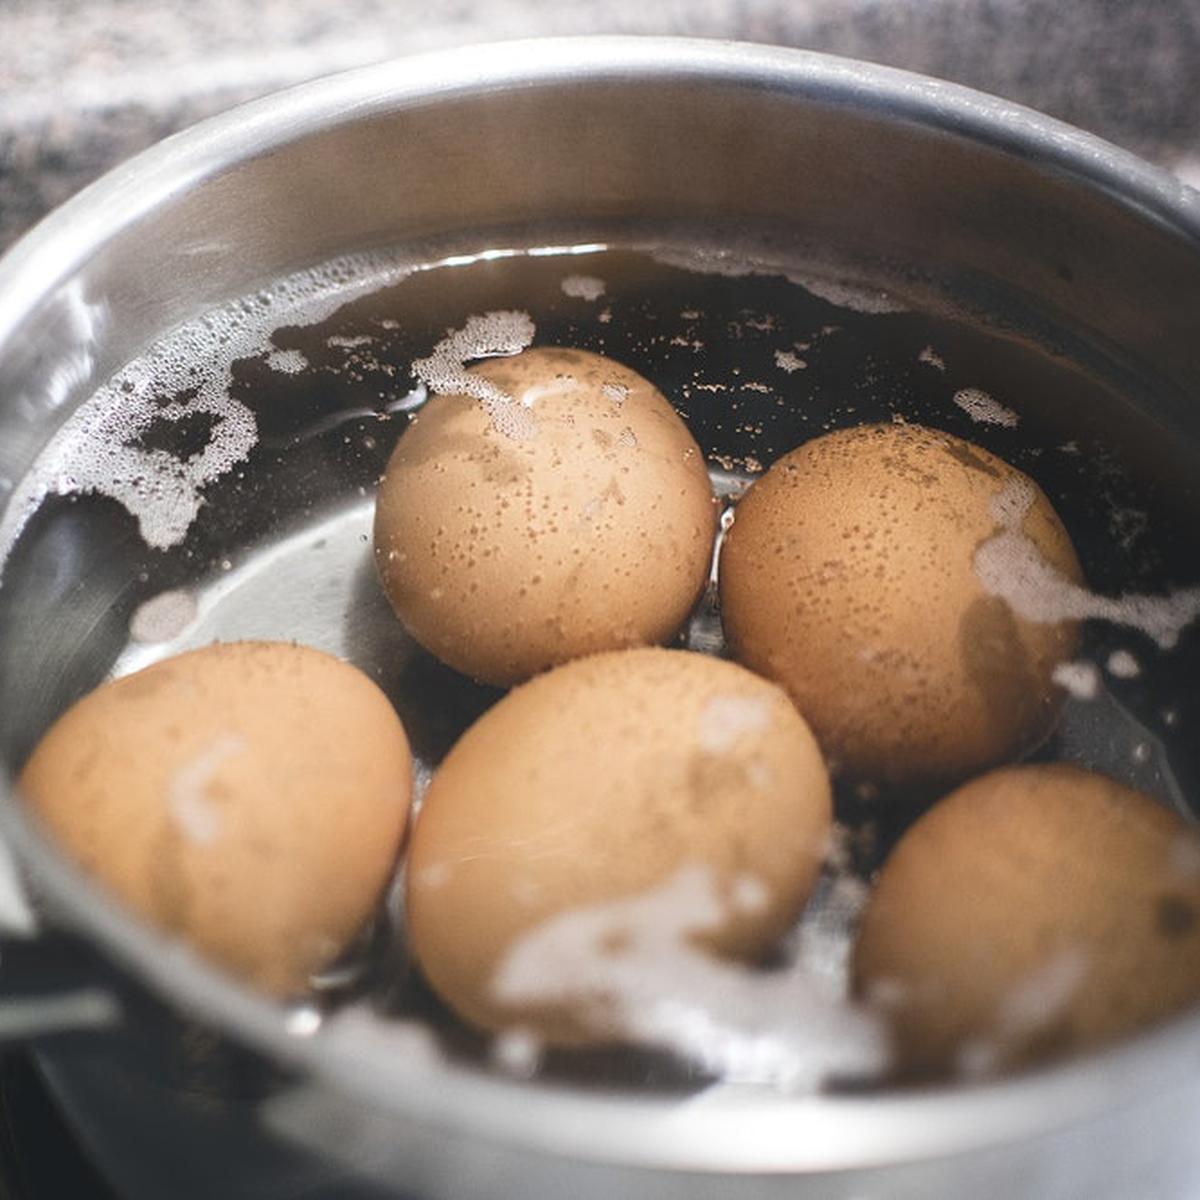 003094400 1542783060 a019 jakubk 0729 hard boiling eggs